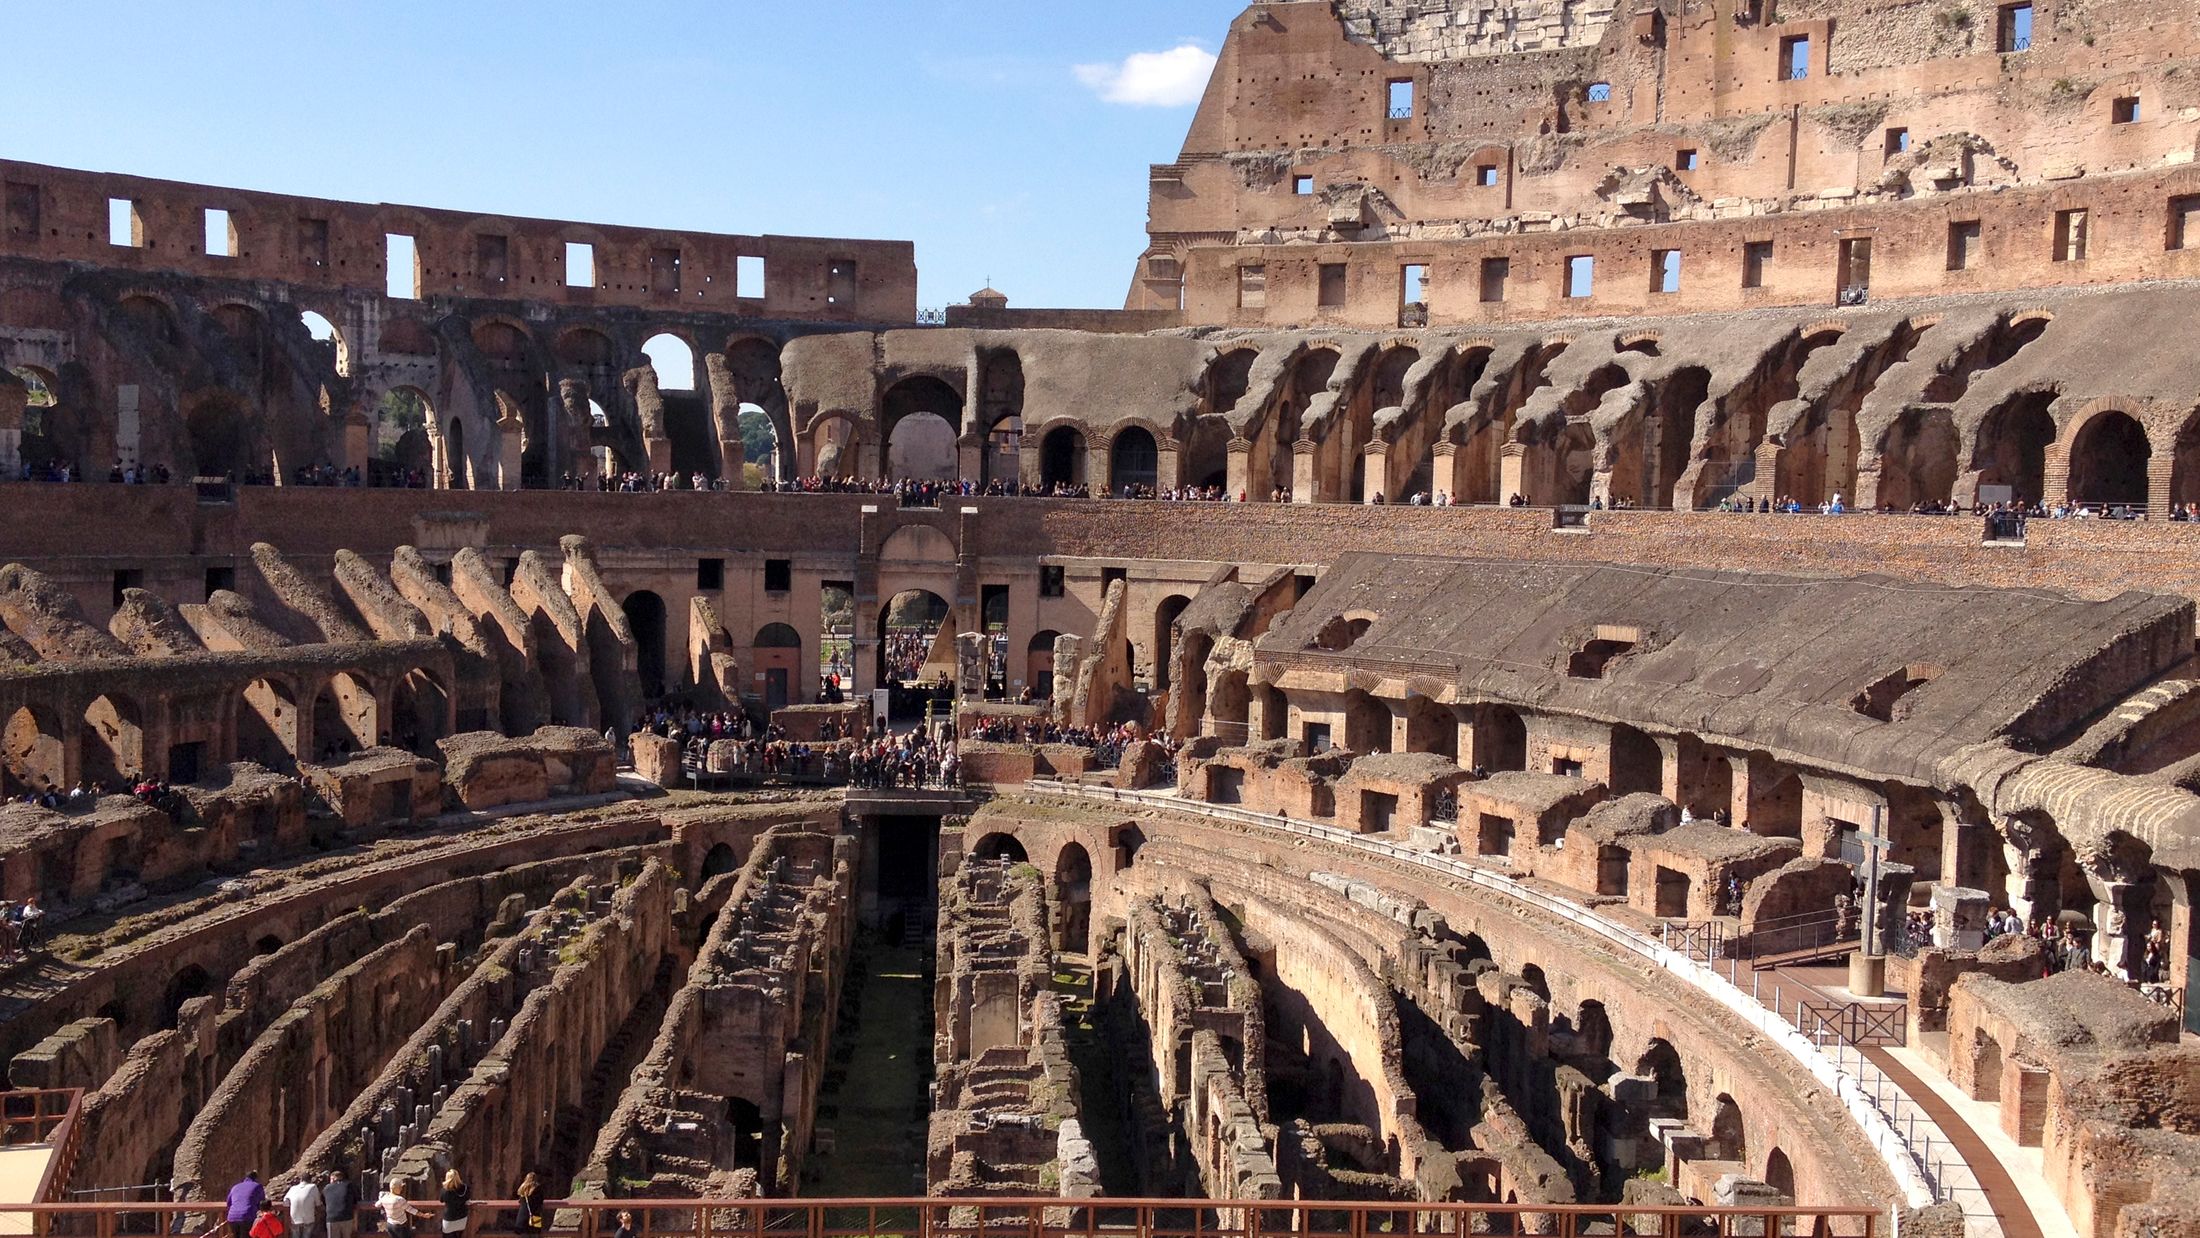 000940_Colosseum_Rome_Italy_Mick Barnard_no model release signed_002-Hybris